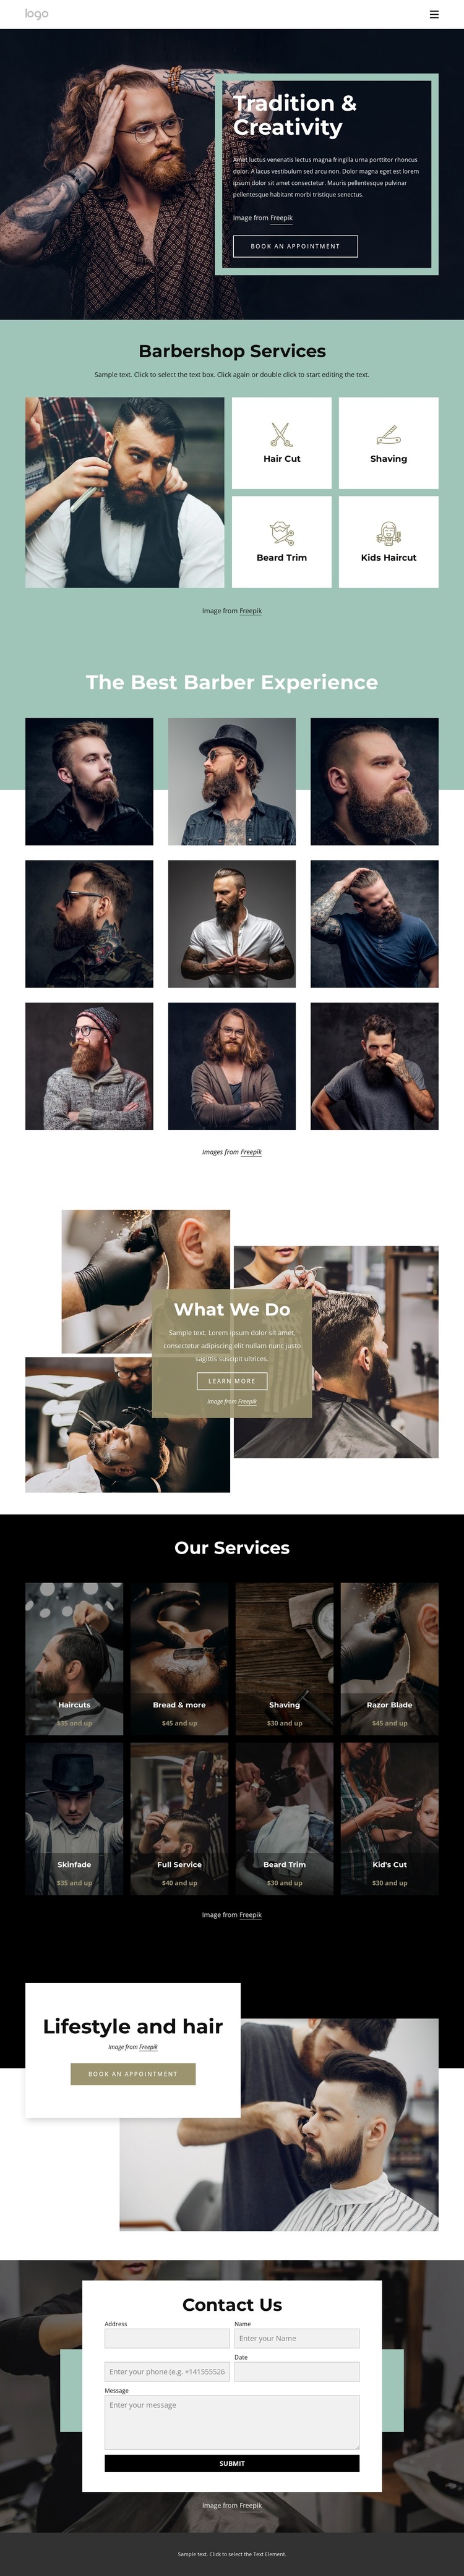 Public barber salon Web Design